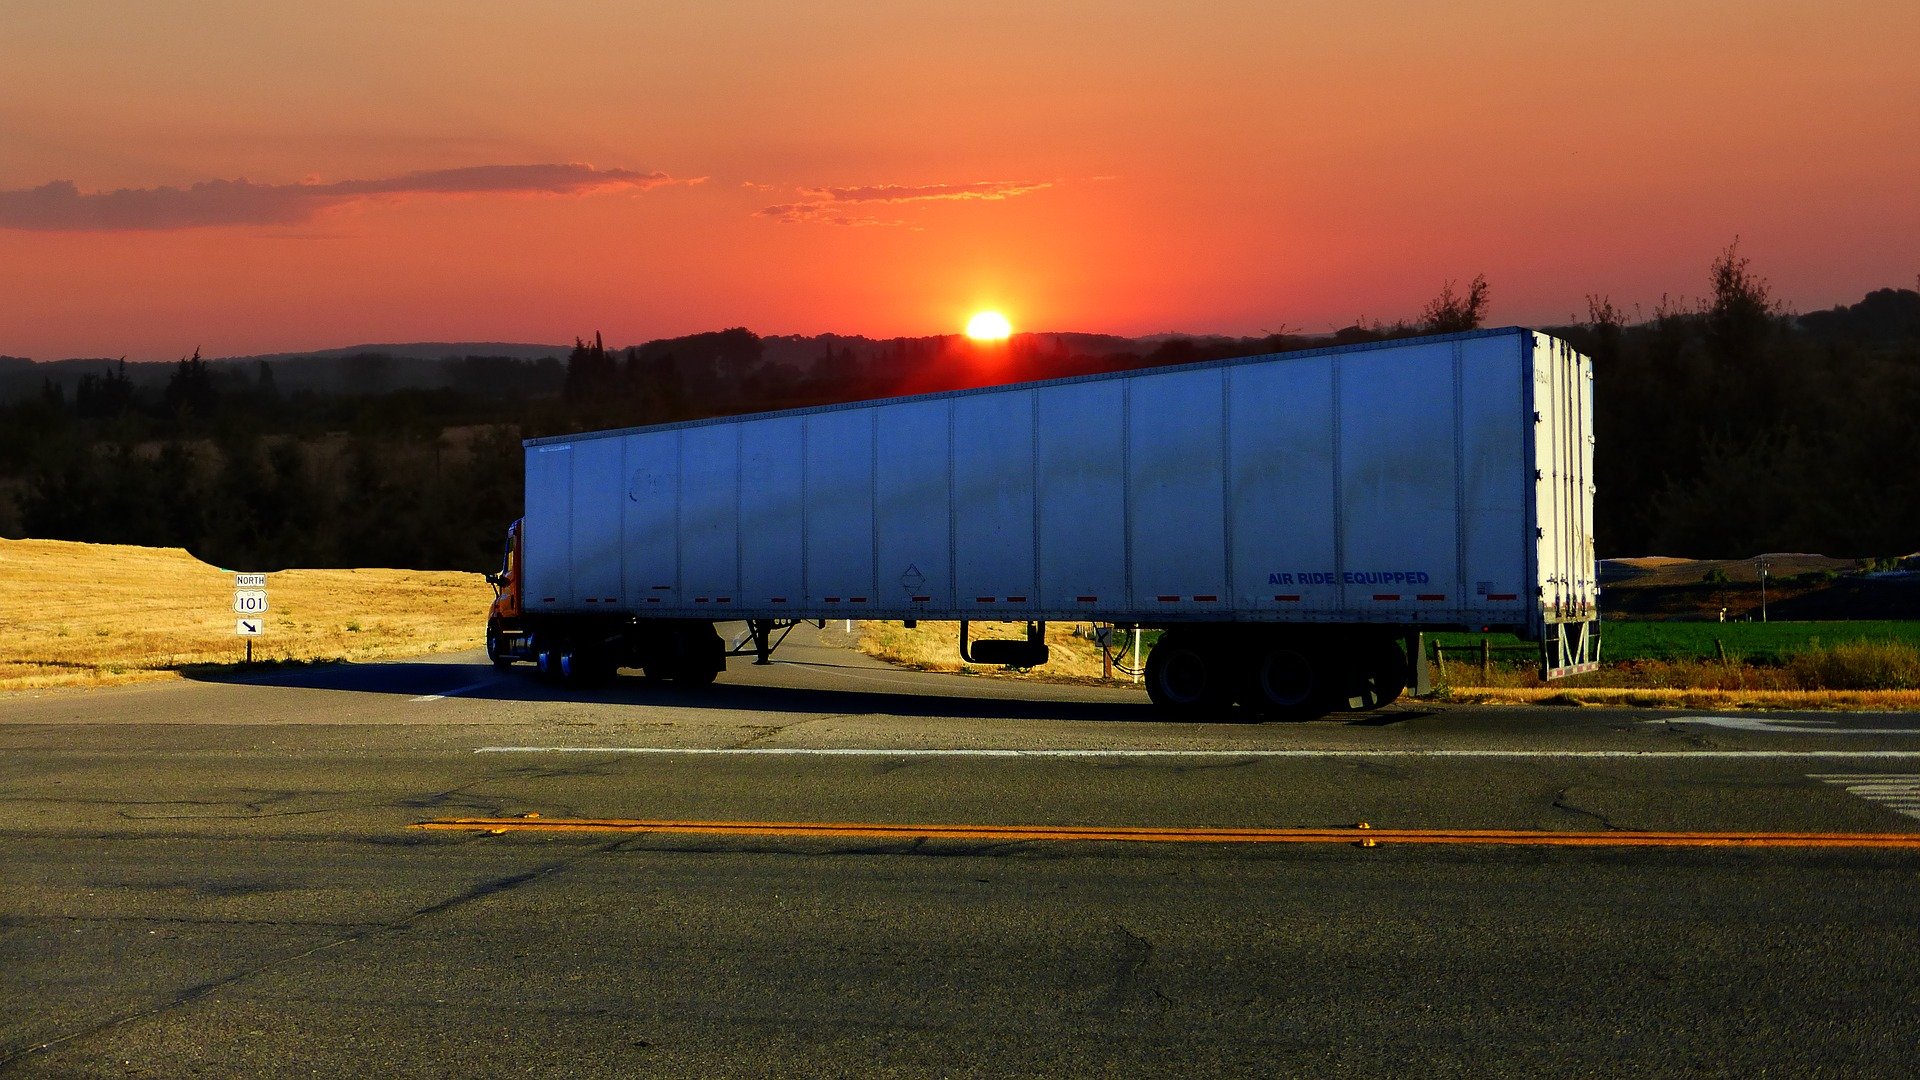 Truck trailer at sunset: credit RENE RAUSCHENBERGER from Pixabay